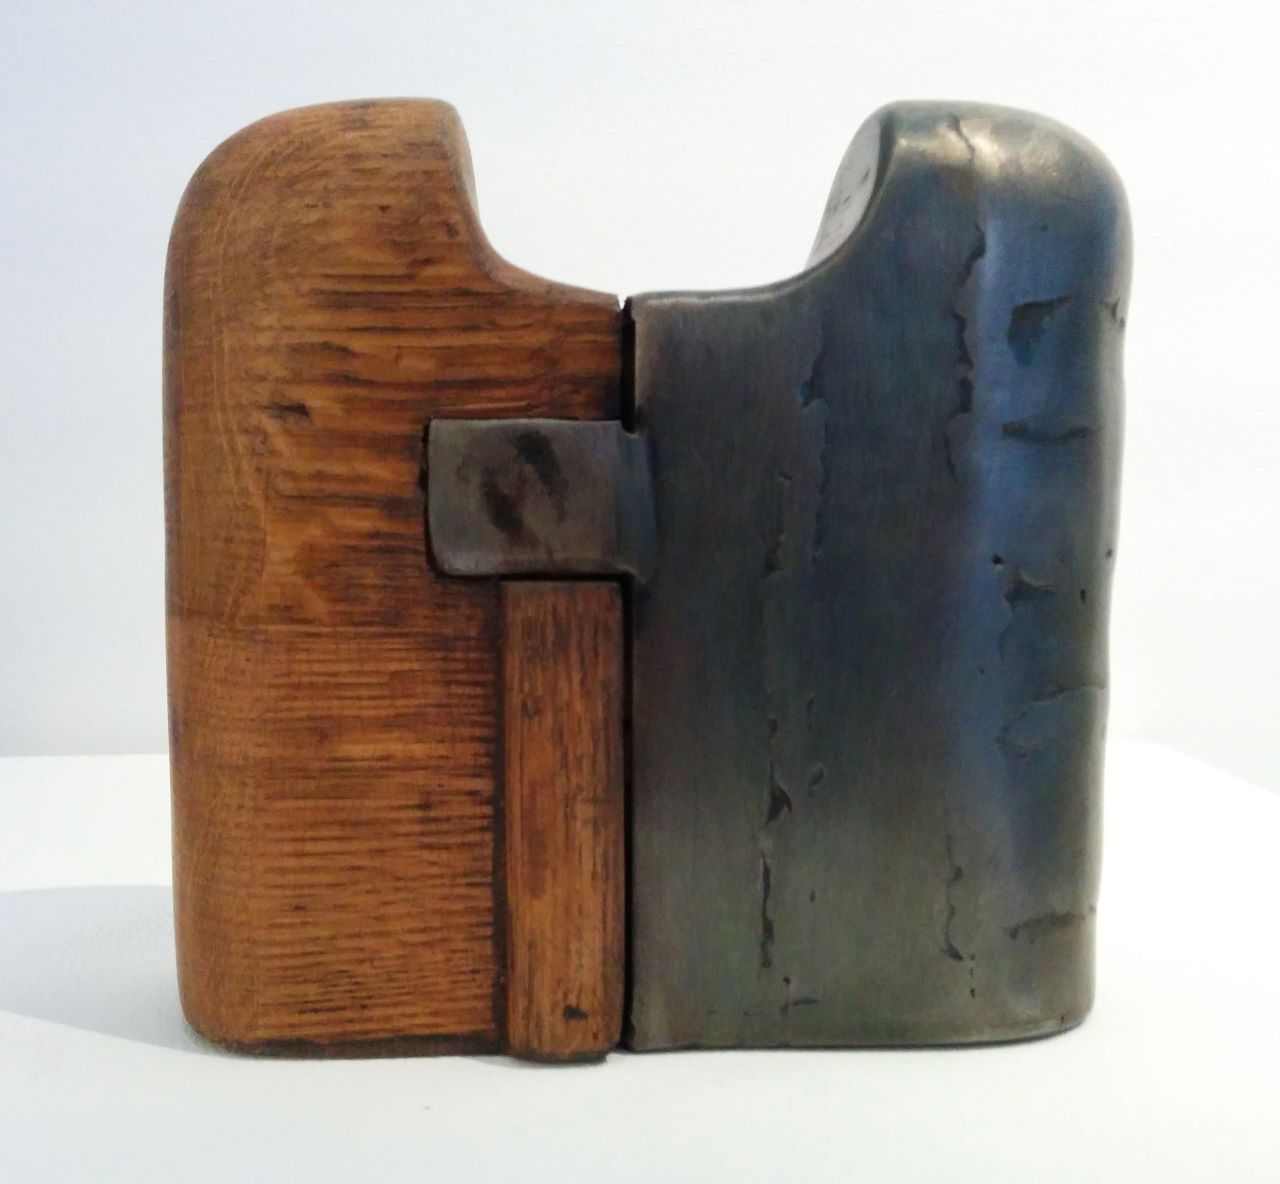 Gerda Bier  Janus  2015  Edition 5/6  Holz, Eisen  15 cm x 16 cm x 6 cm verkauft! 